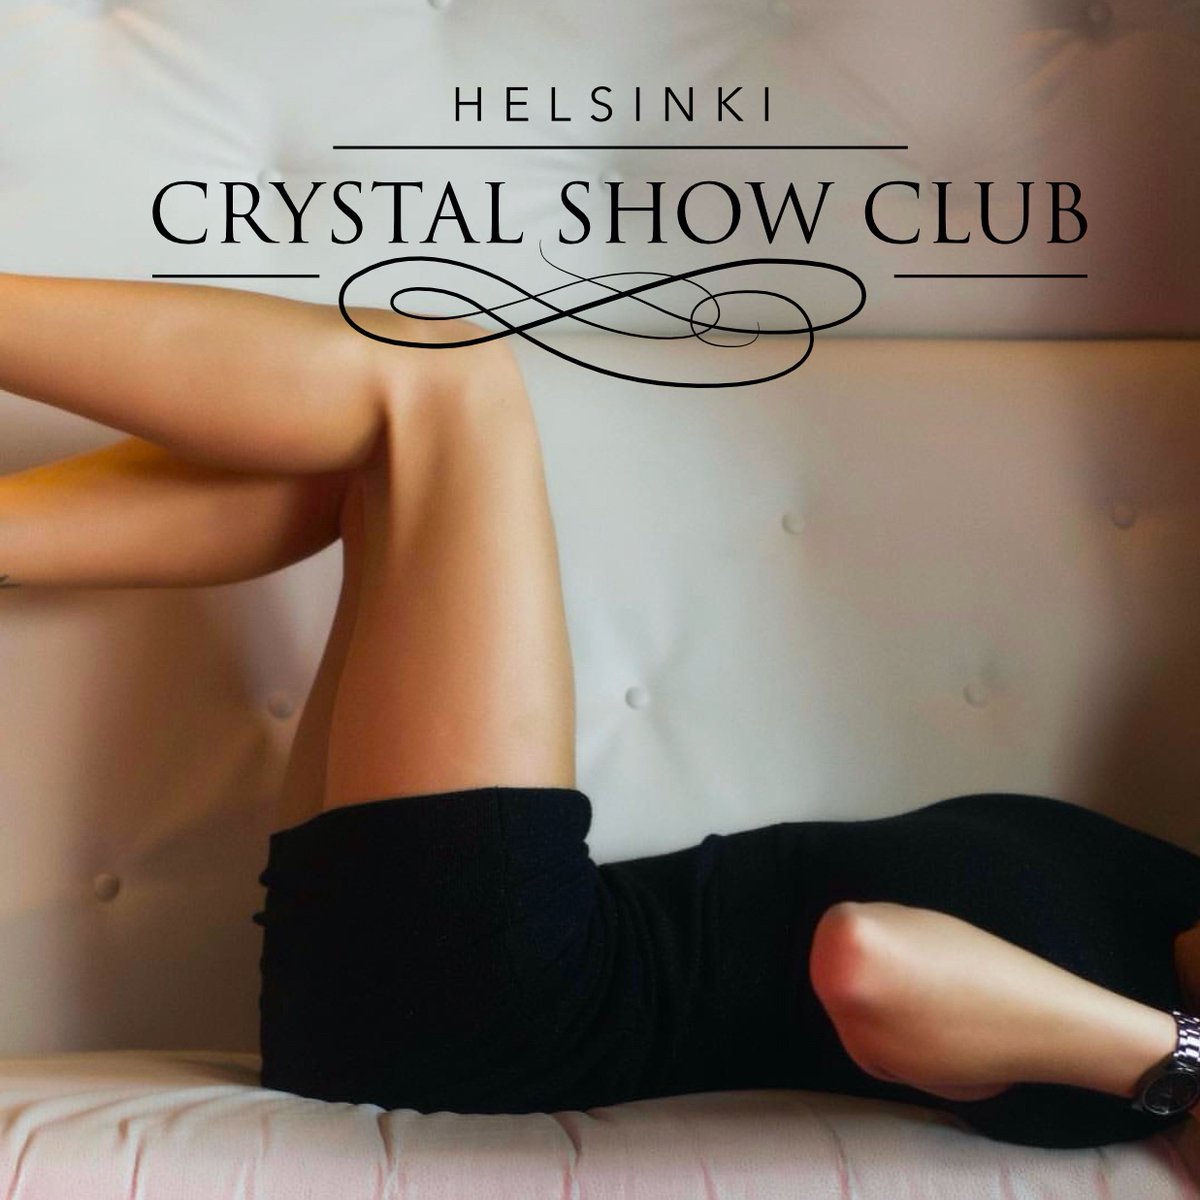 #sunday Heats hit Helsinki our but babes waiting rescue you at #crystalshowclub #cmoref1 #norris #austriagp #hamilton #ravit #formula1 #bottas #f1fi @ Crystal Show Club (k24)https://t.co/kH904TOqFI https://t.co/j6qGiBBBmQ